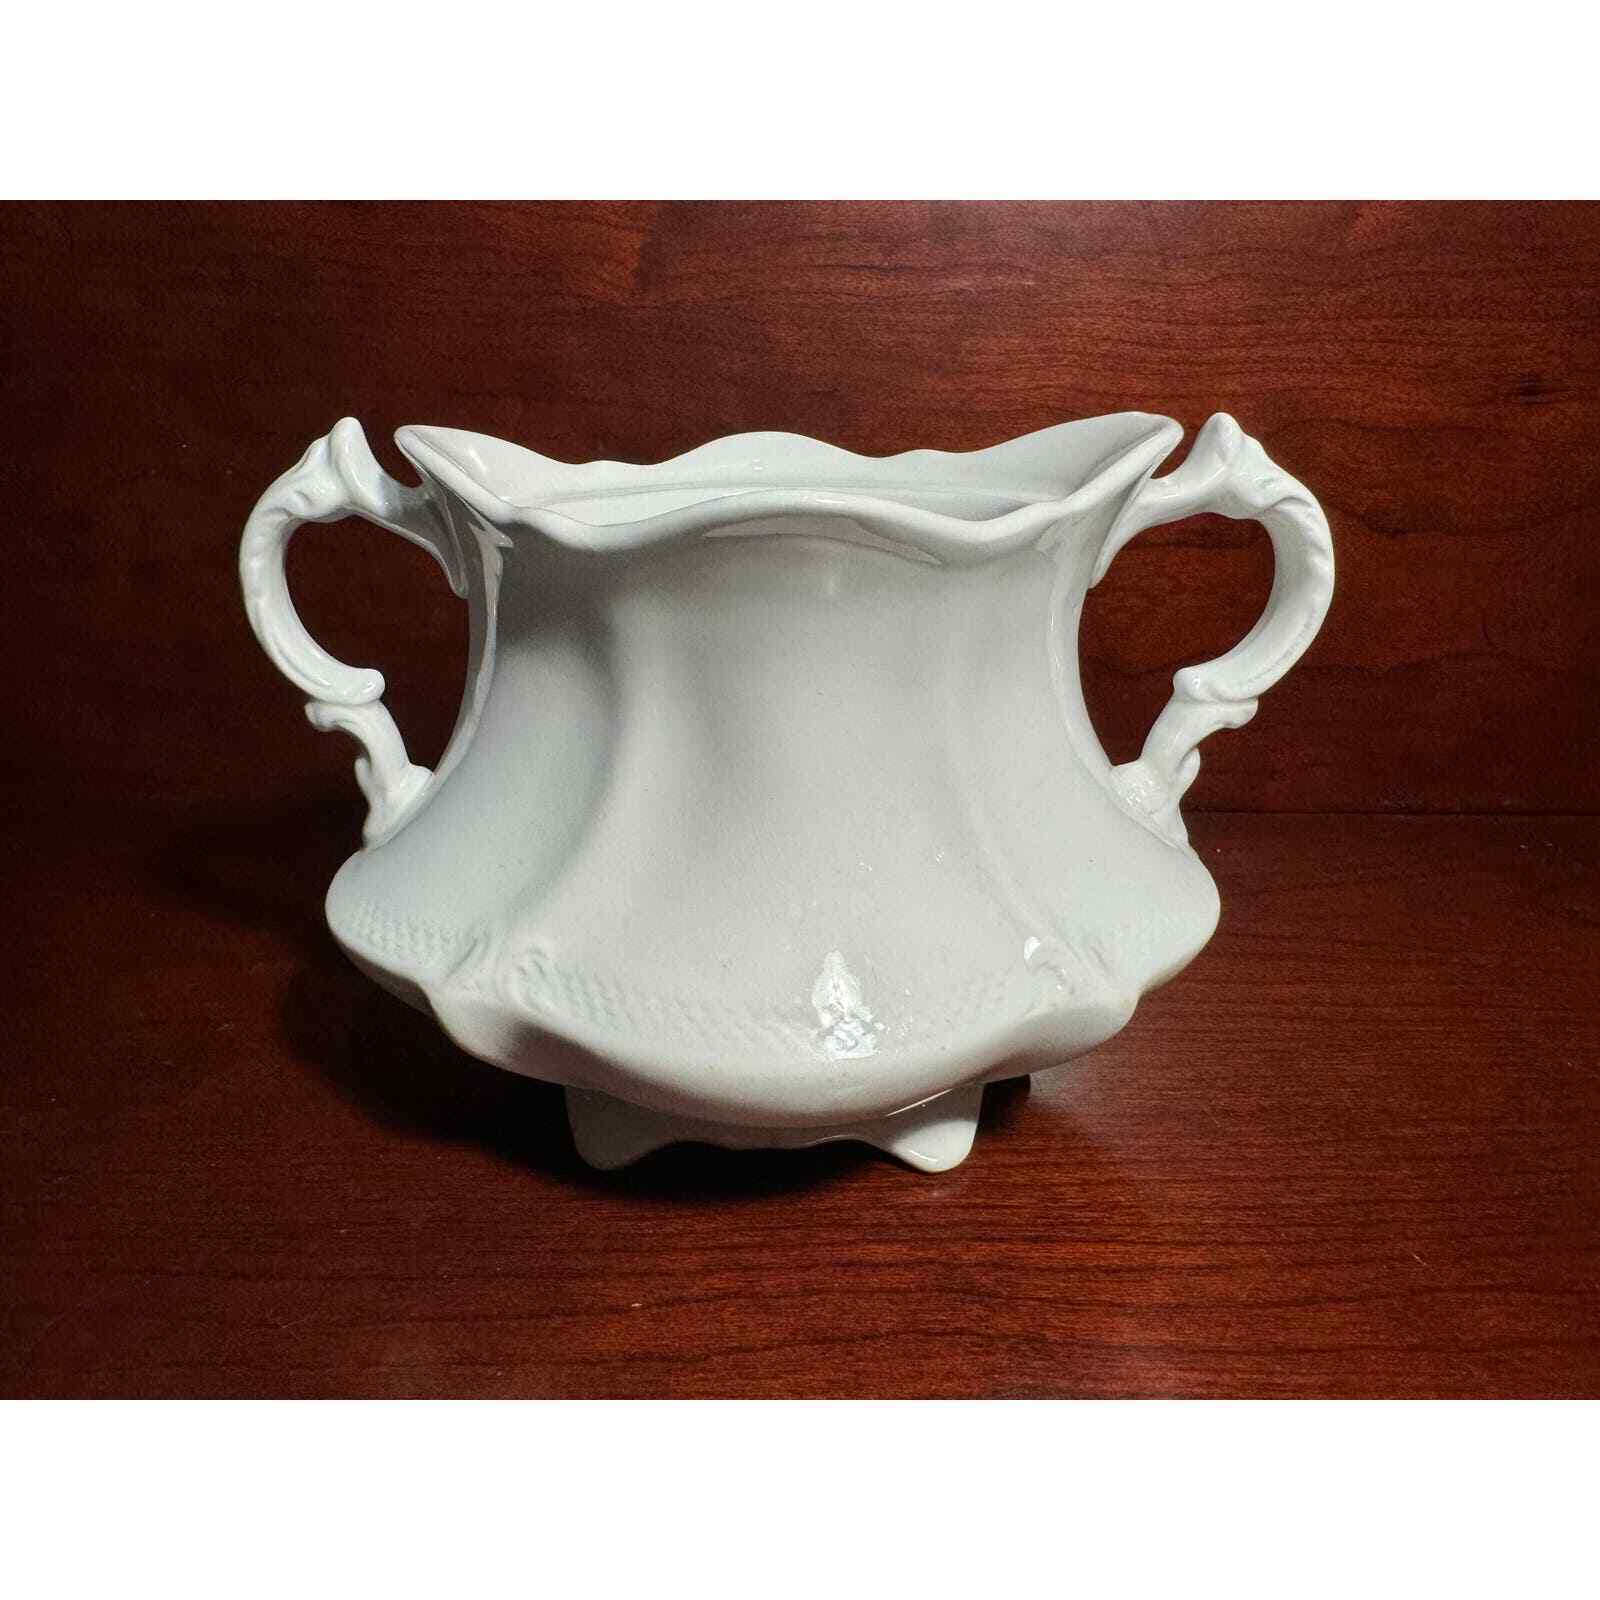 Vintage W. H. Grindley & Co. England Semi-Porcelain White Serving Dish 2 Handles